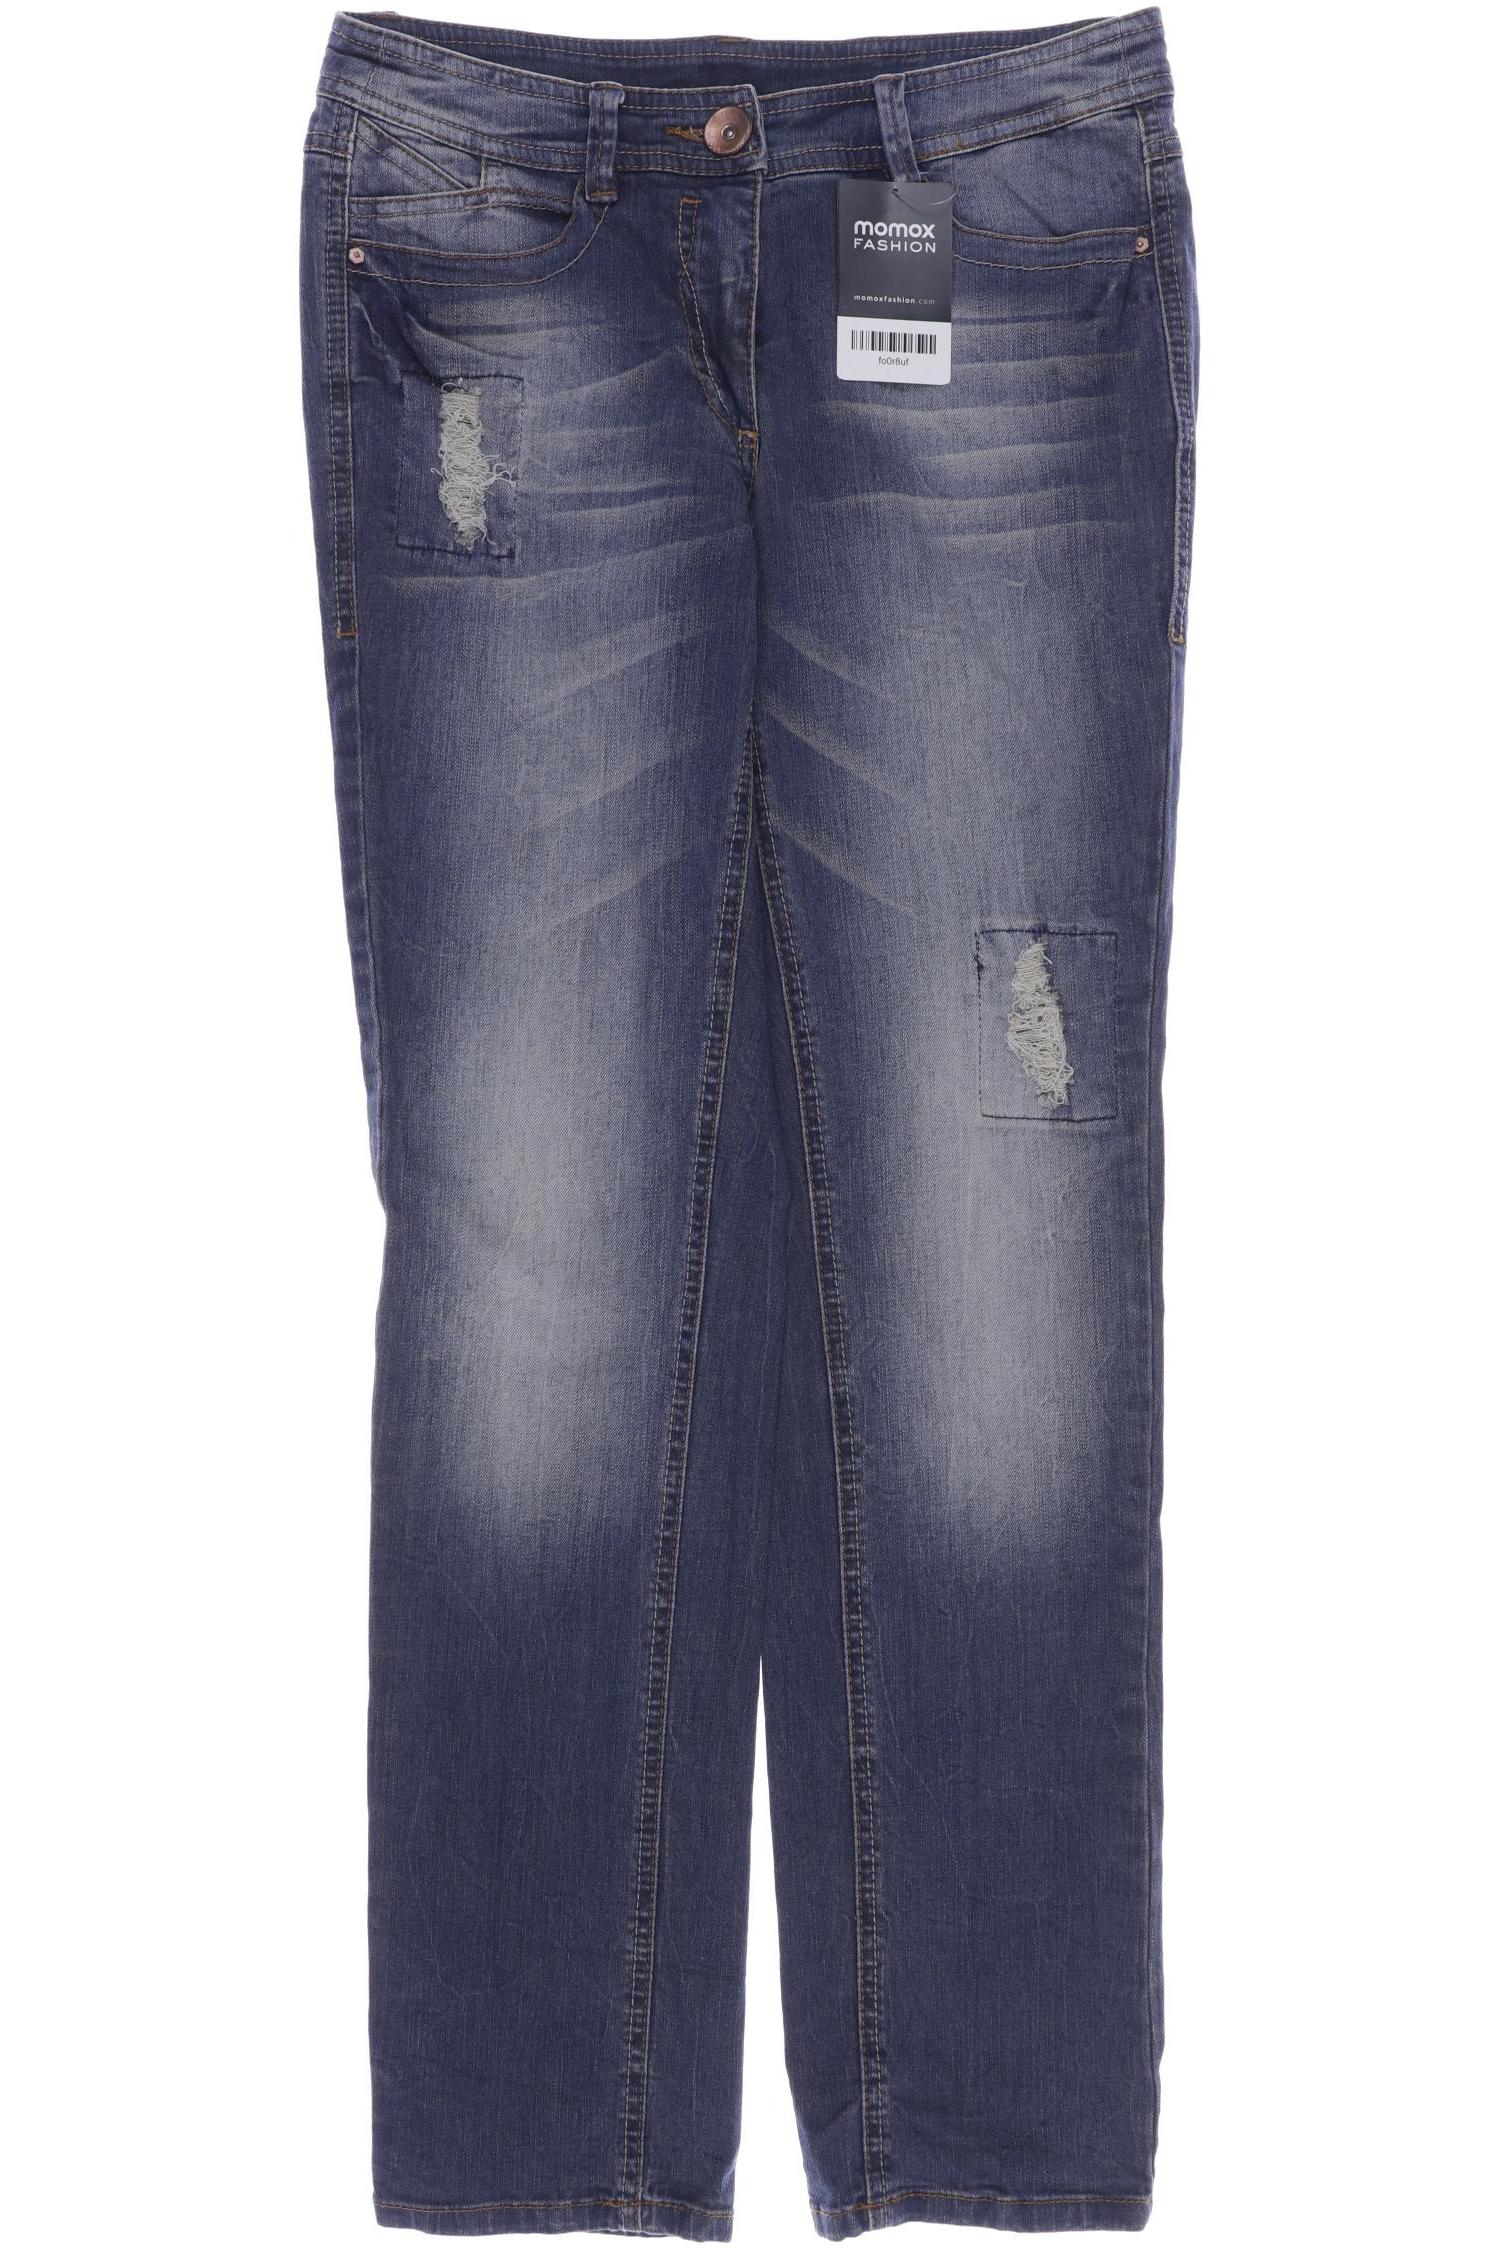 Cecil Damen Jeans, blau, Gr. 38 von cecil